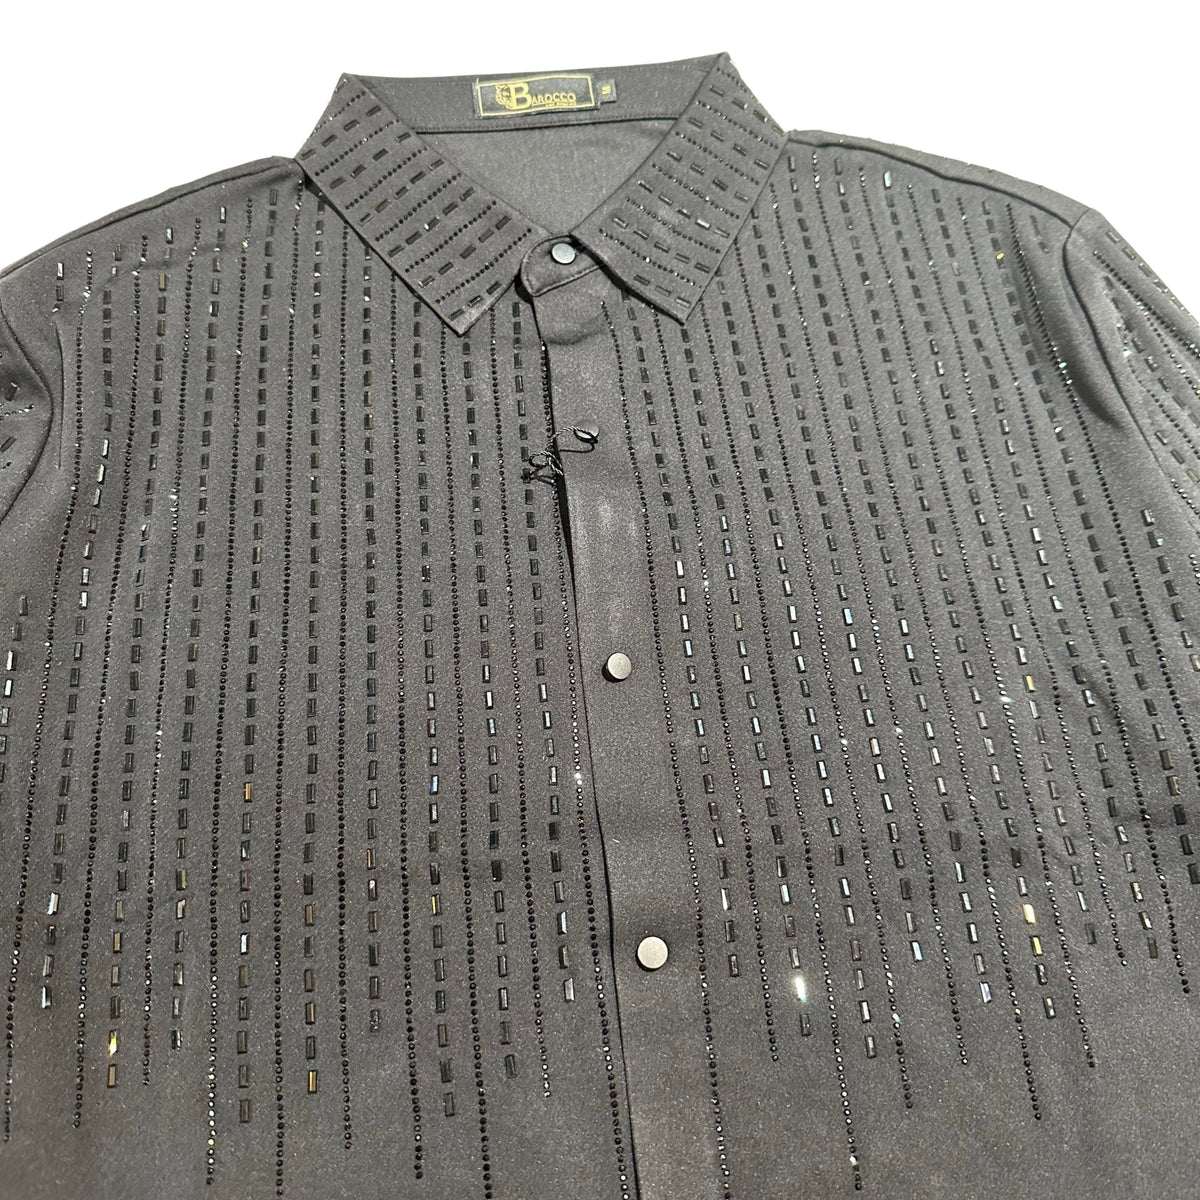 Barocco Black/Black Crystal Rain Button Up Shirt - Dudes Boutique